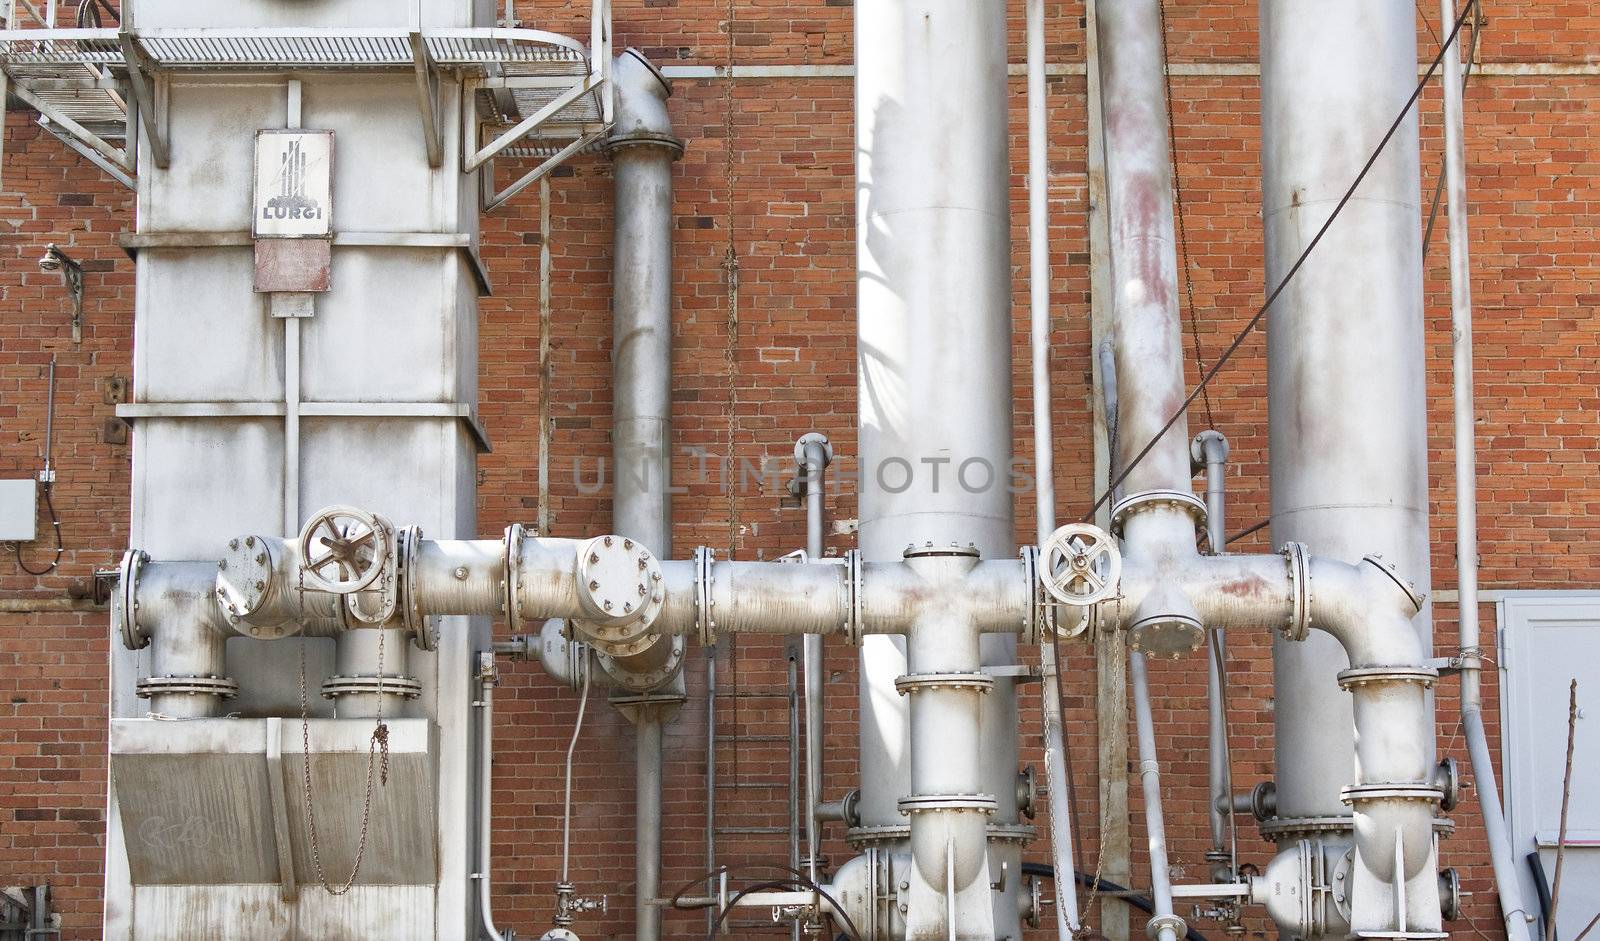 Gasworks Pipes by Brigida_Soriano